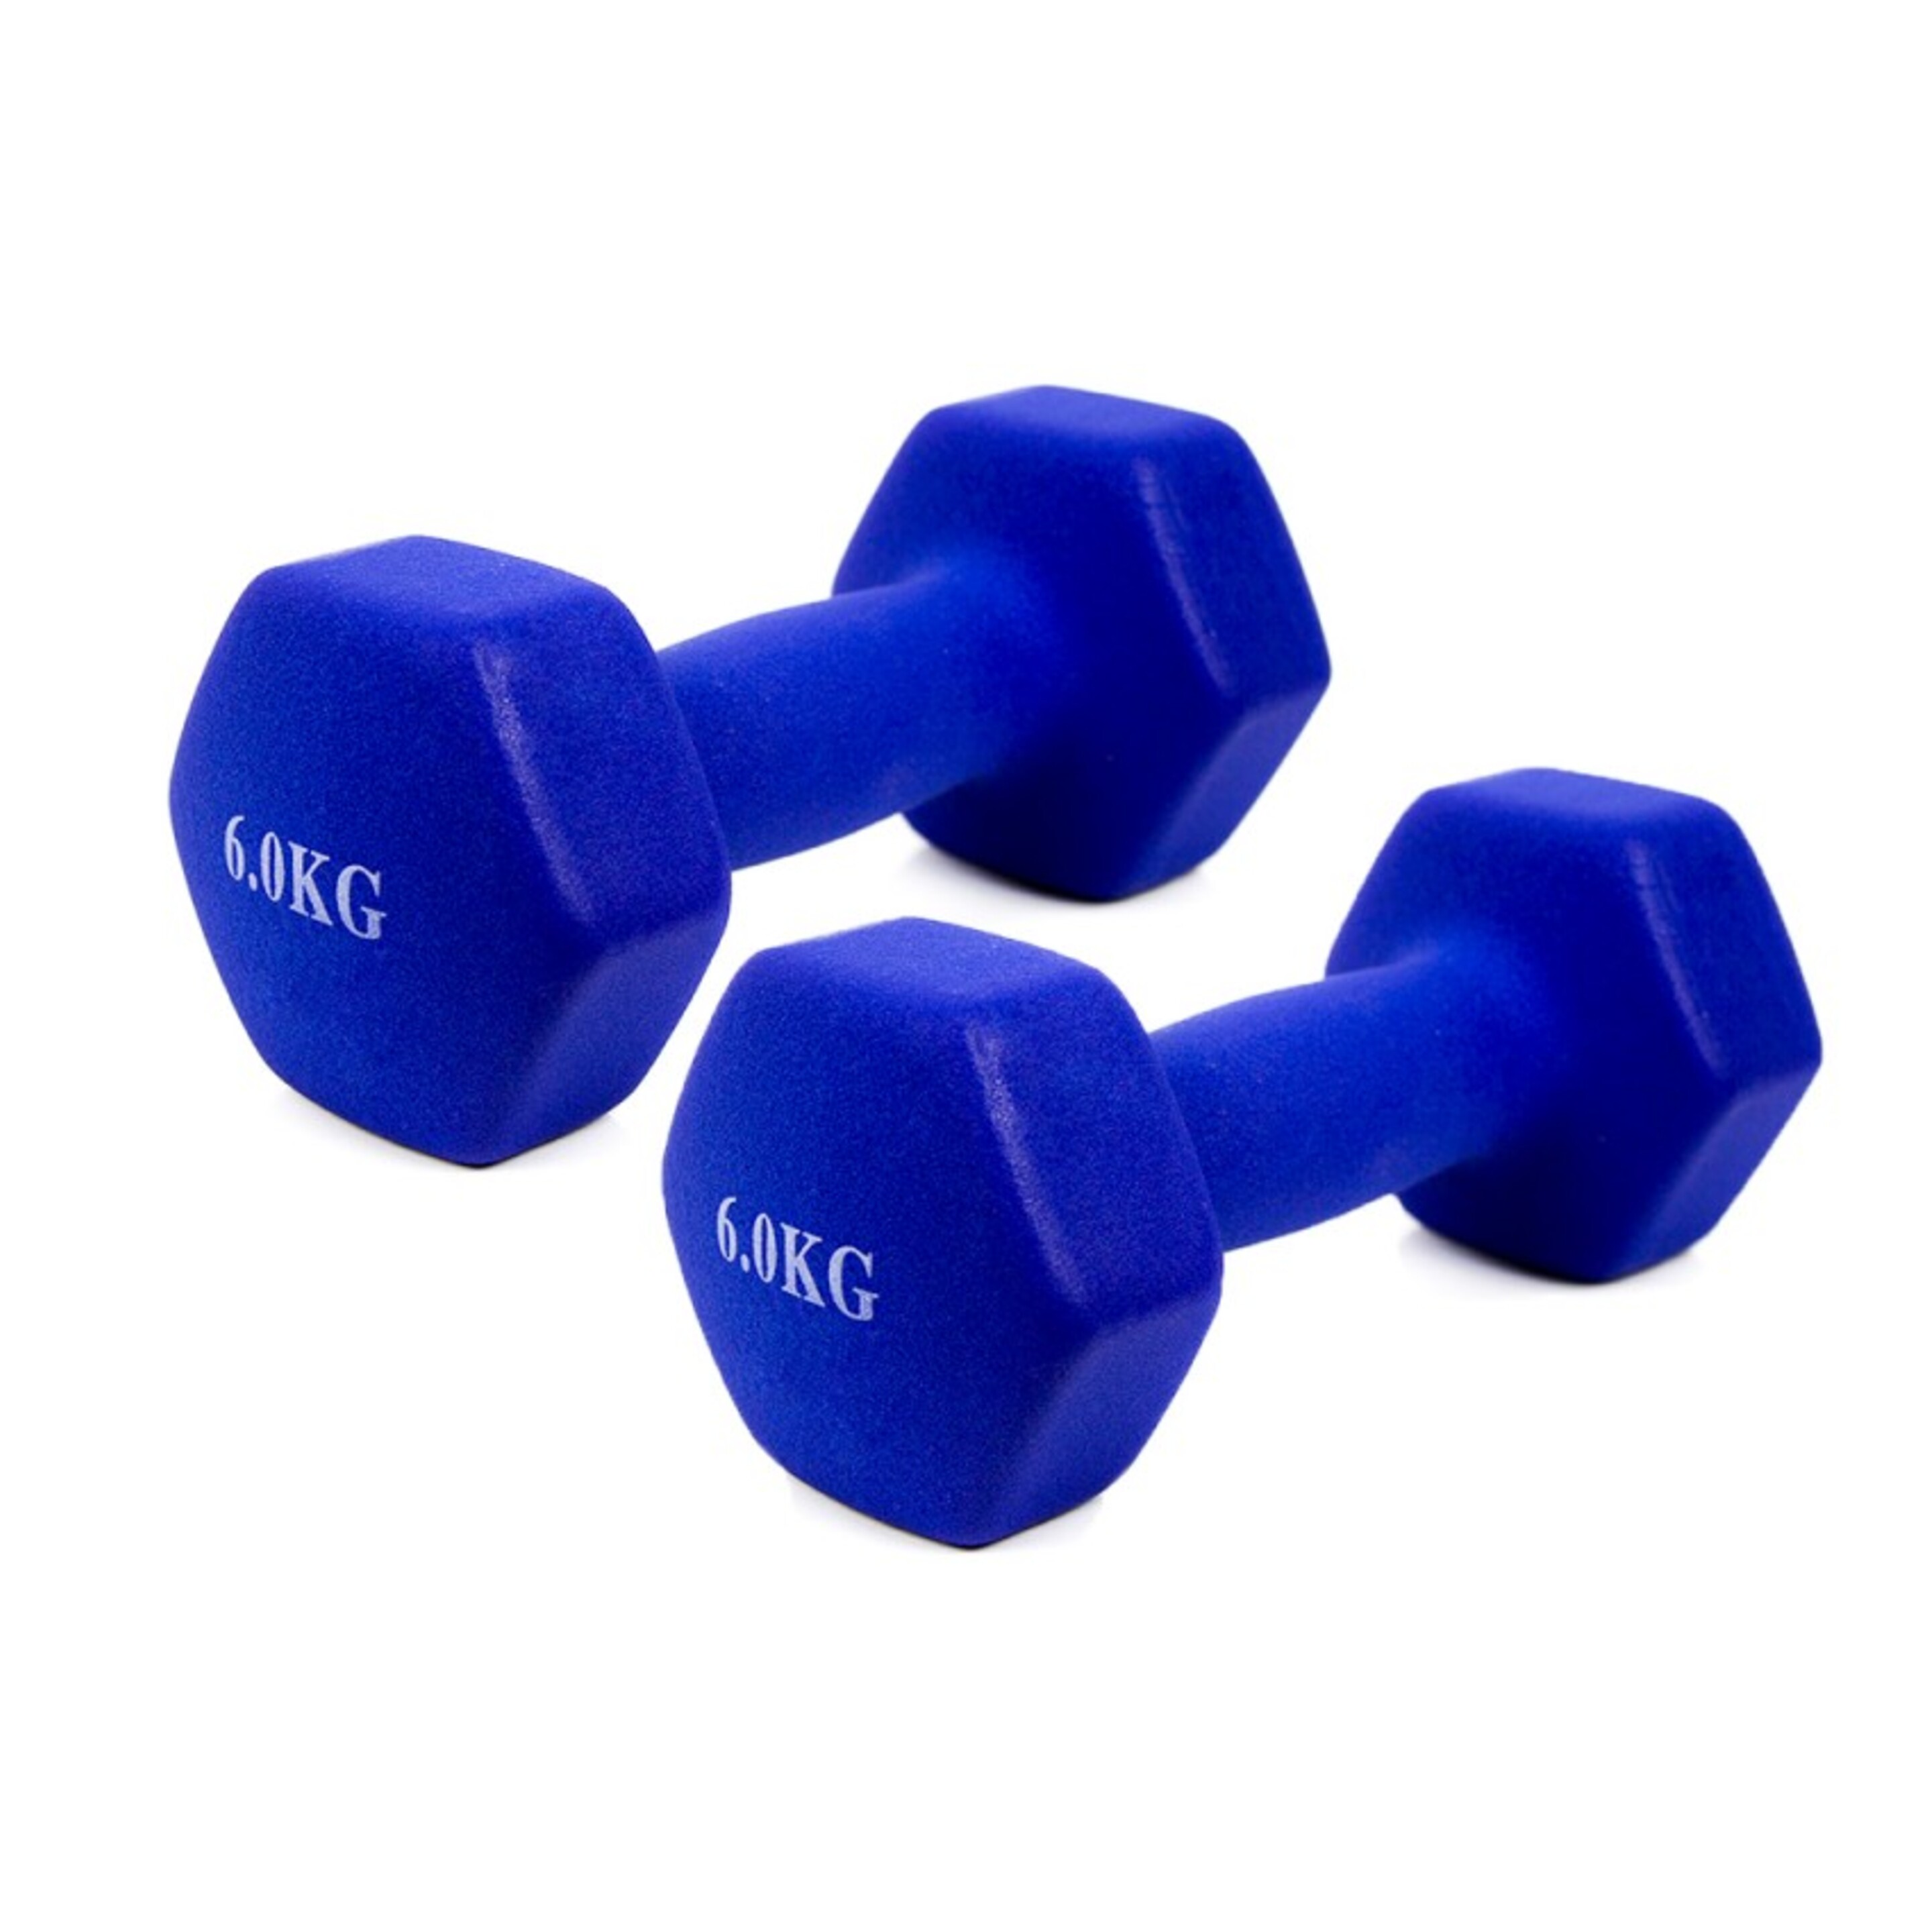 Mancuernas De 6 Kg Antiresbalantes - Azul  MKP